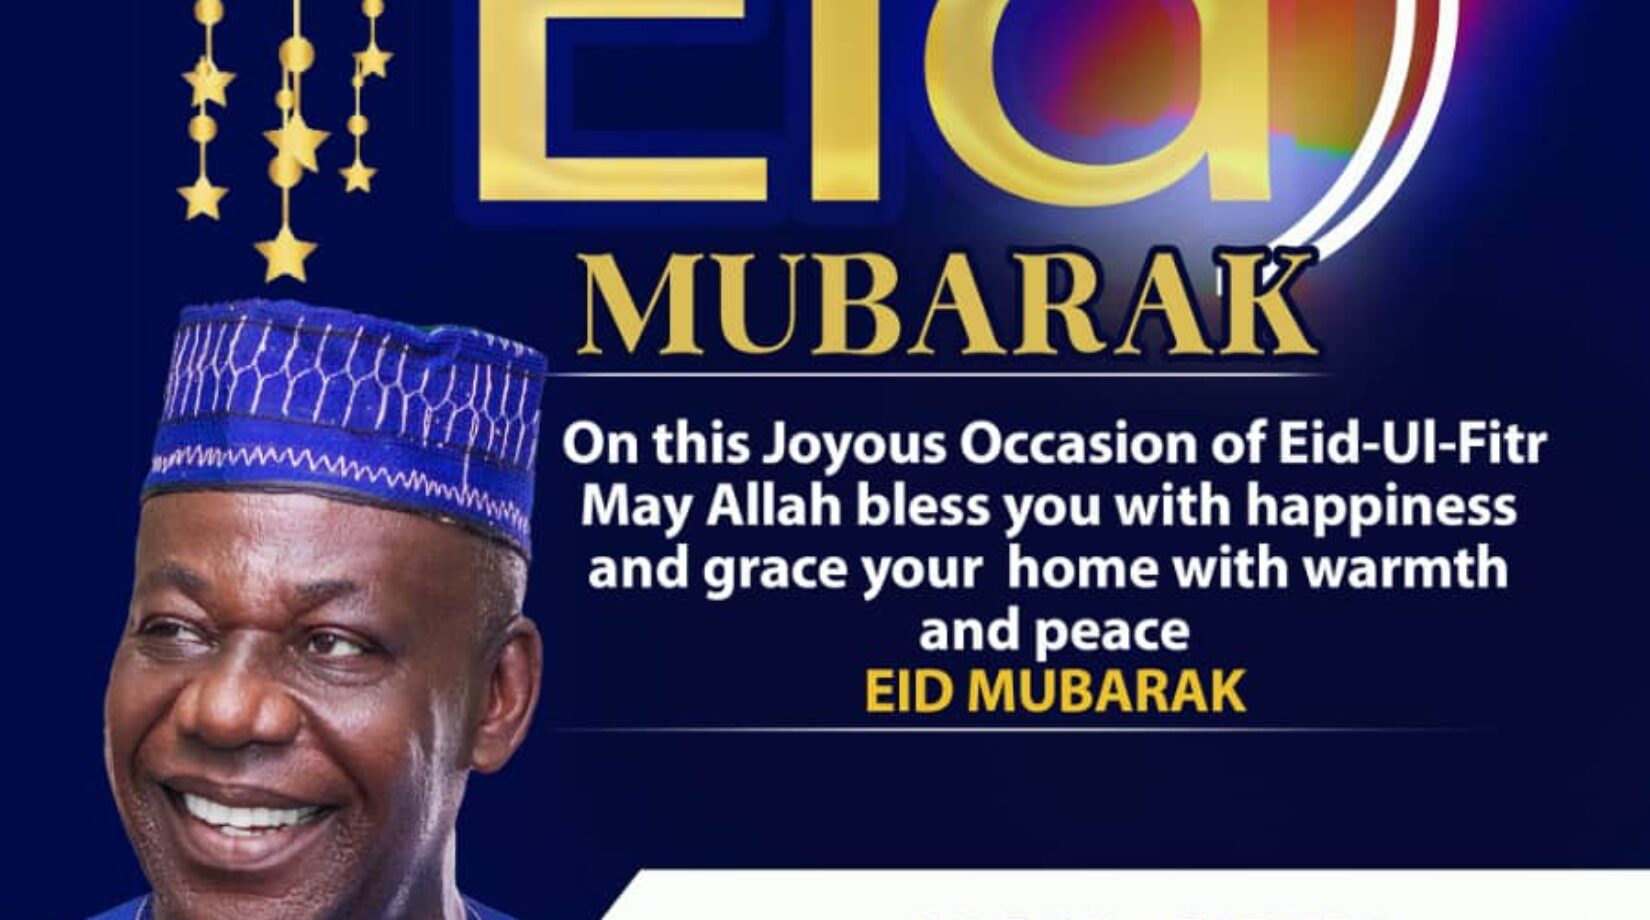 Seth Osei Akoto Wishes all Muslims Happy Eid UI Mubarak